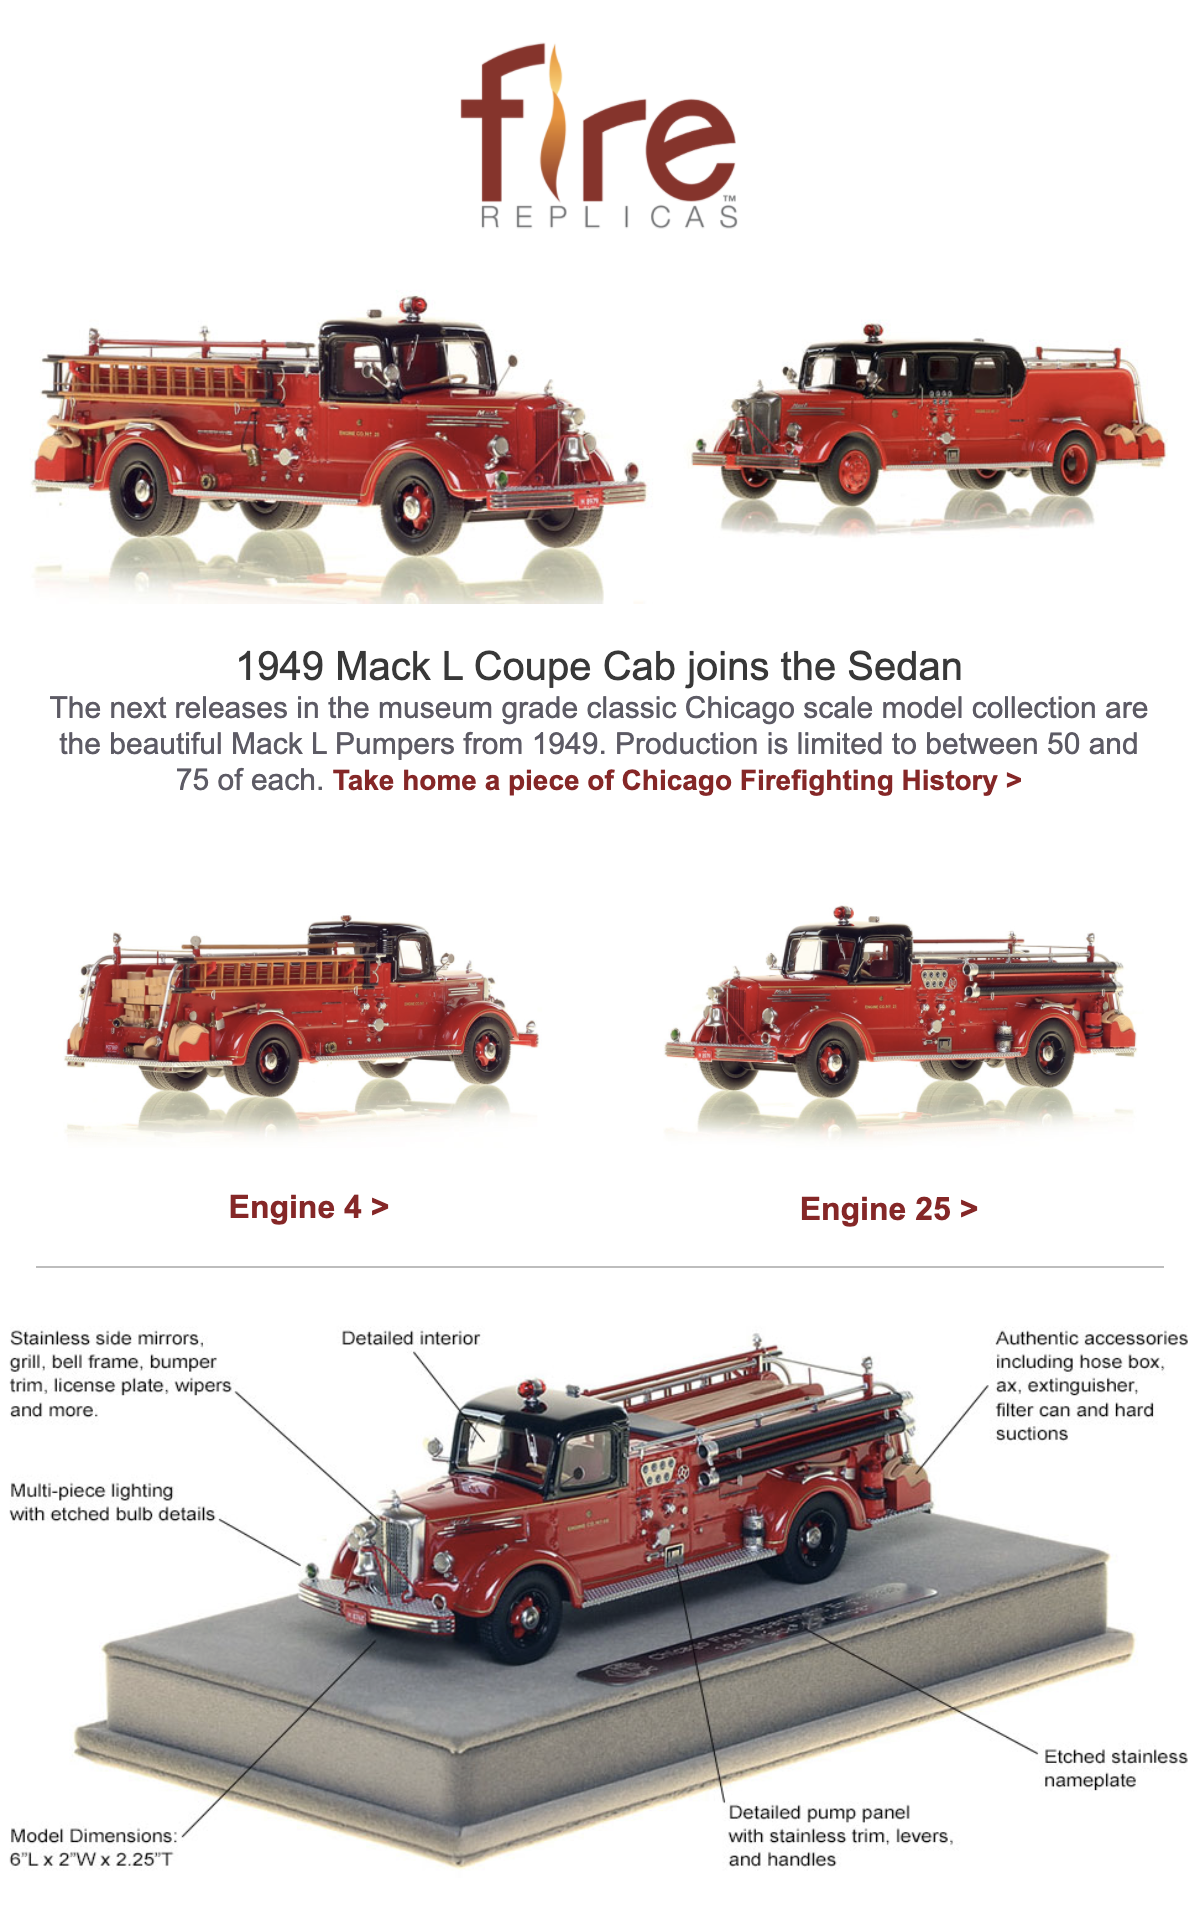 from Fire Replicas - Chicago FD die-cast model of 1948 Mack L sedan cab pumper